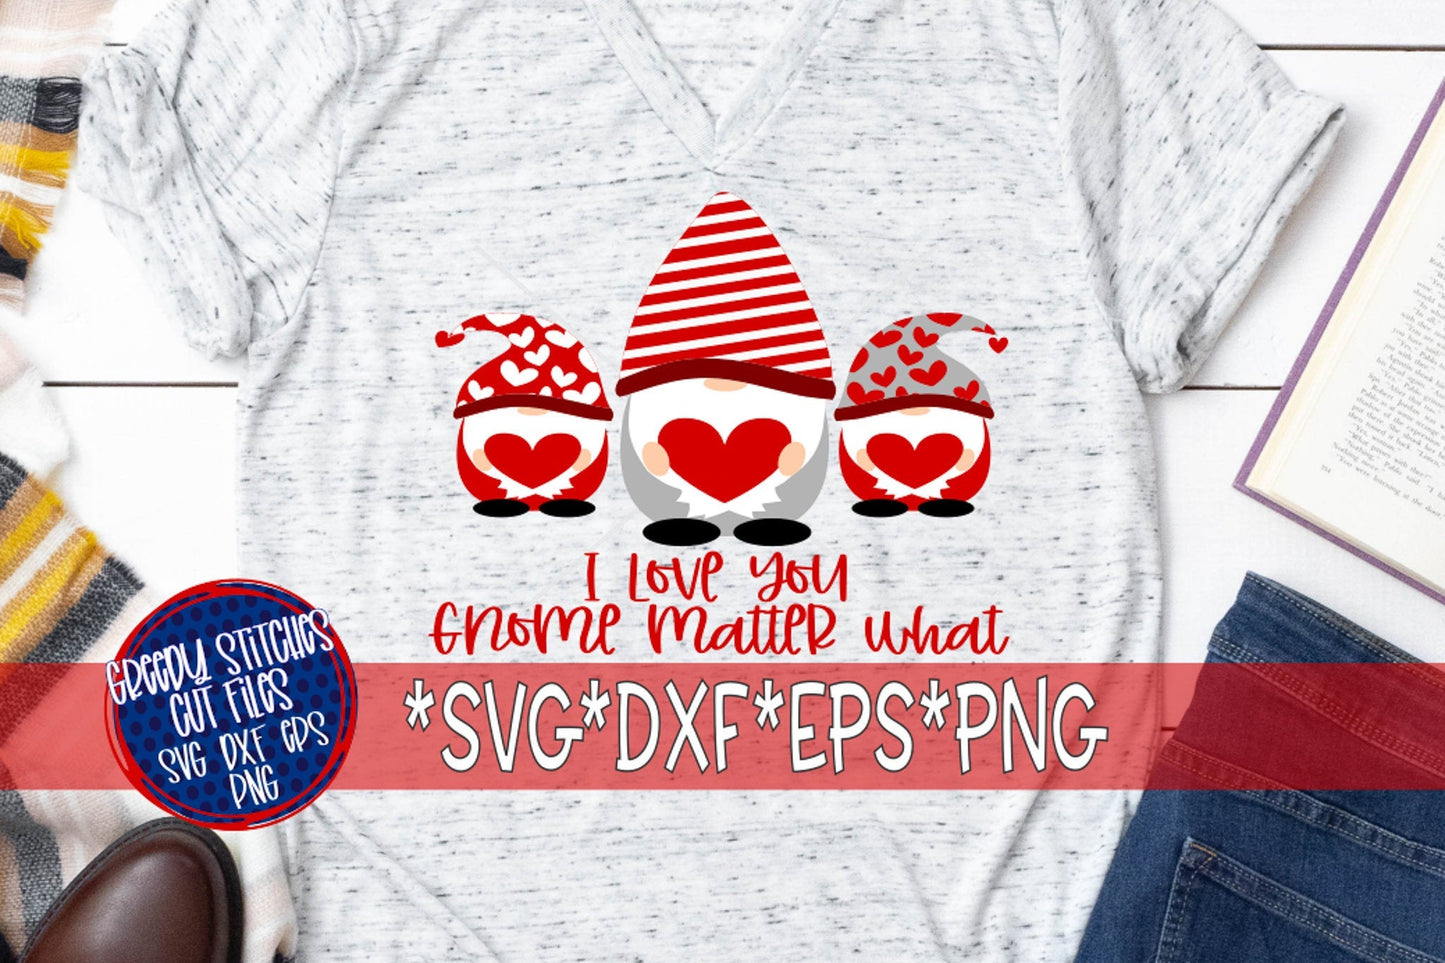 I Love You Gnome Matter What svg dxf eps png. Gnome SvG | Valentine&#39;s Day SvG | Gnomie SvG | Be Mine SvG | Instant Download Cut File